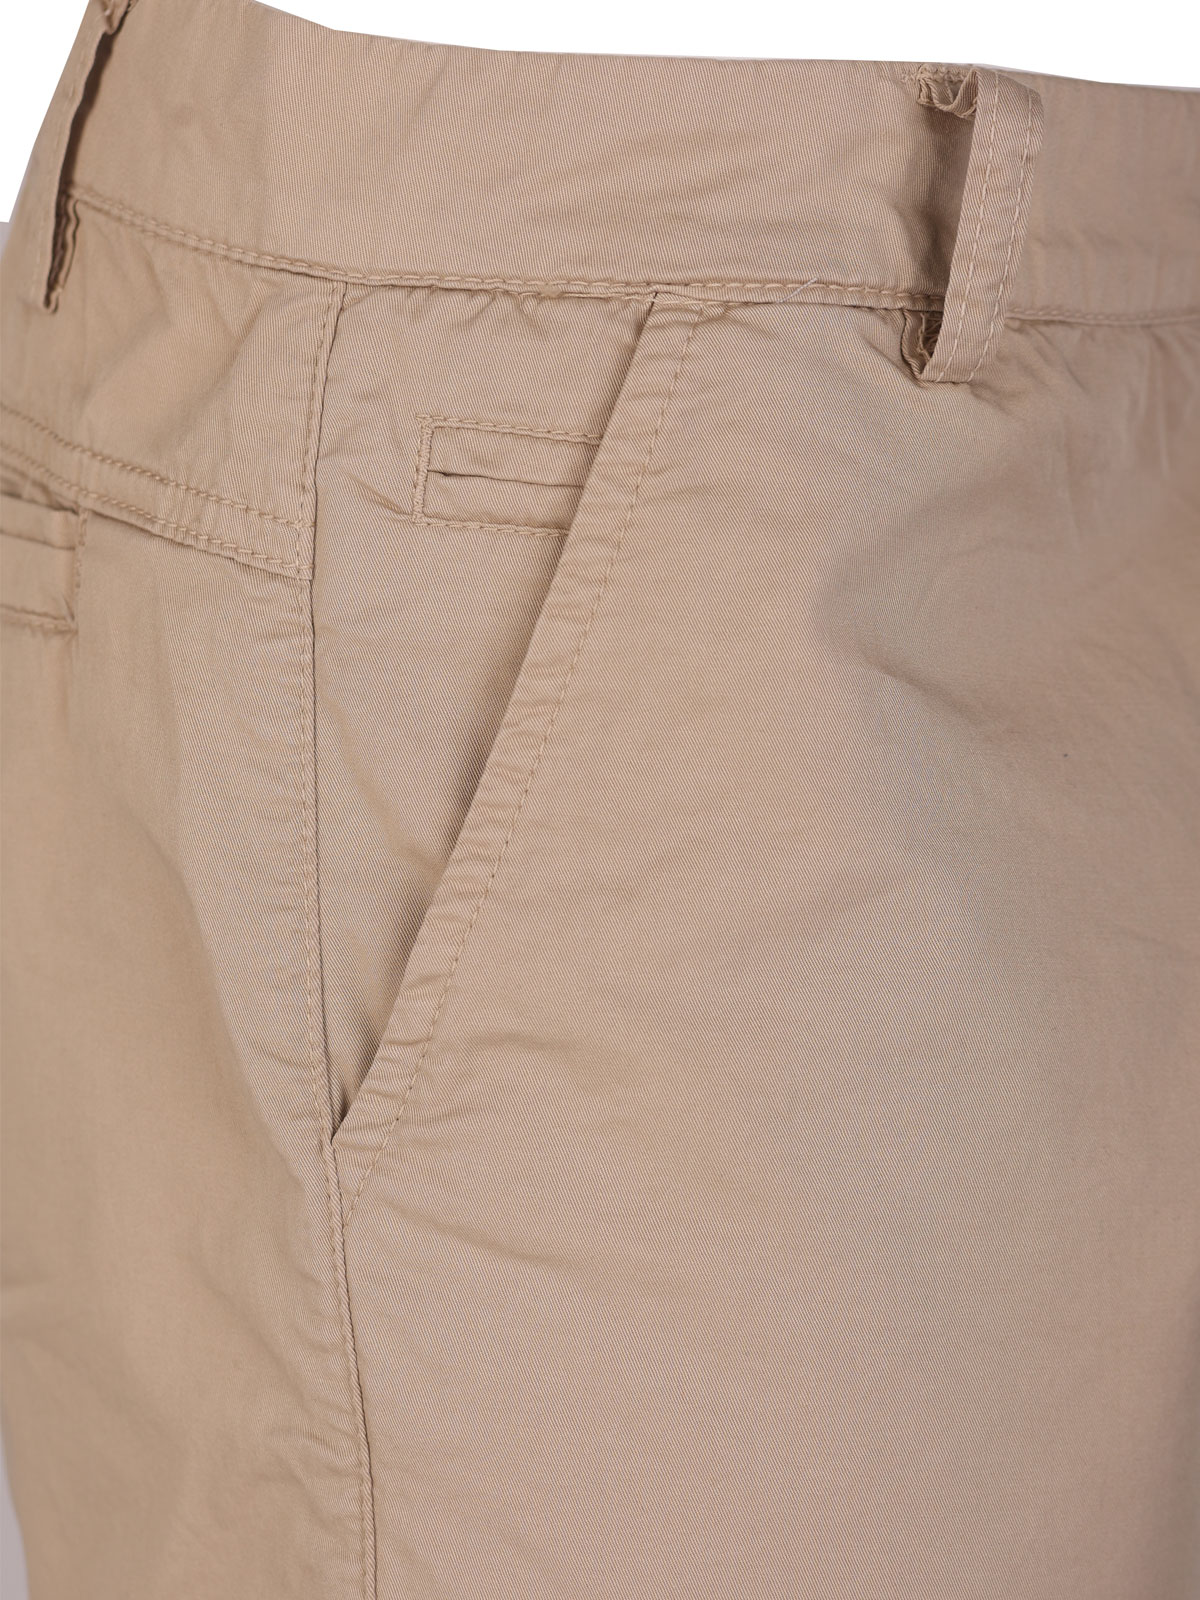 Short pants in beige color - 67095 € 43.87 img2